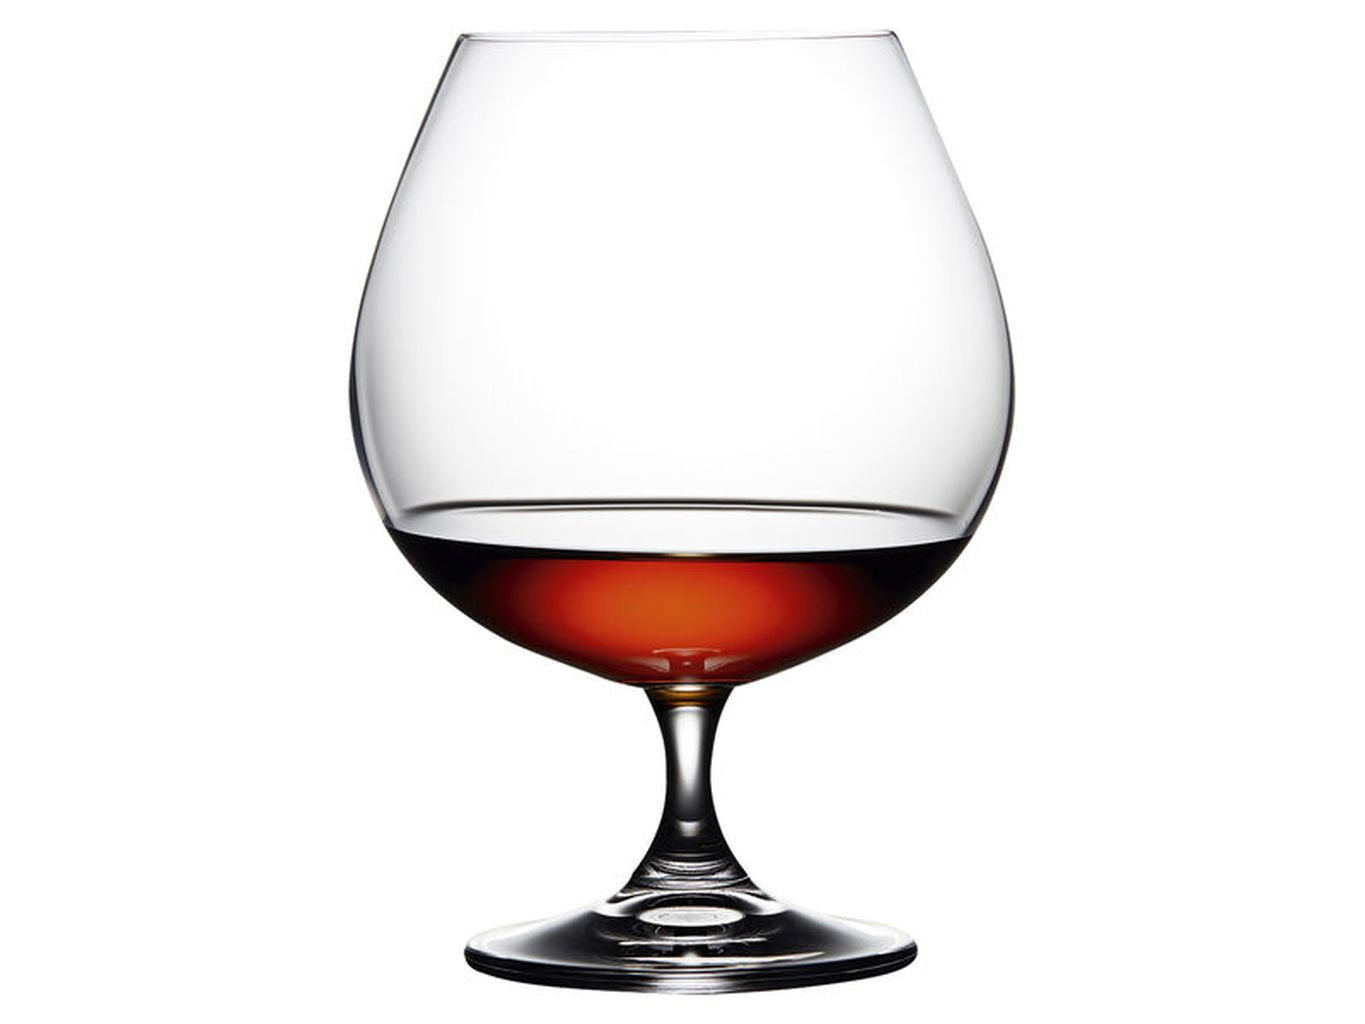 Lyngby Glas Juvel Cognac Glass 69 Cl, 4 Pcs.